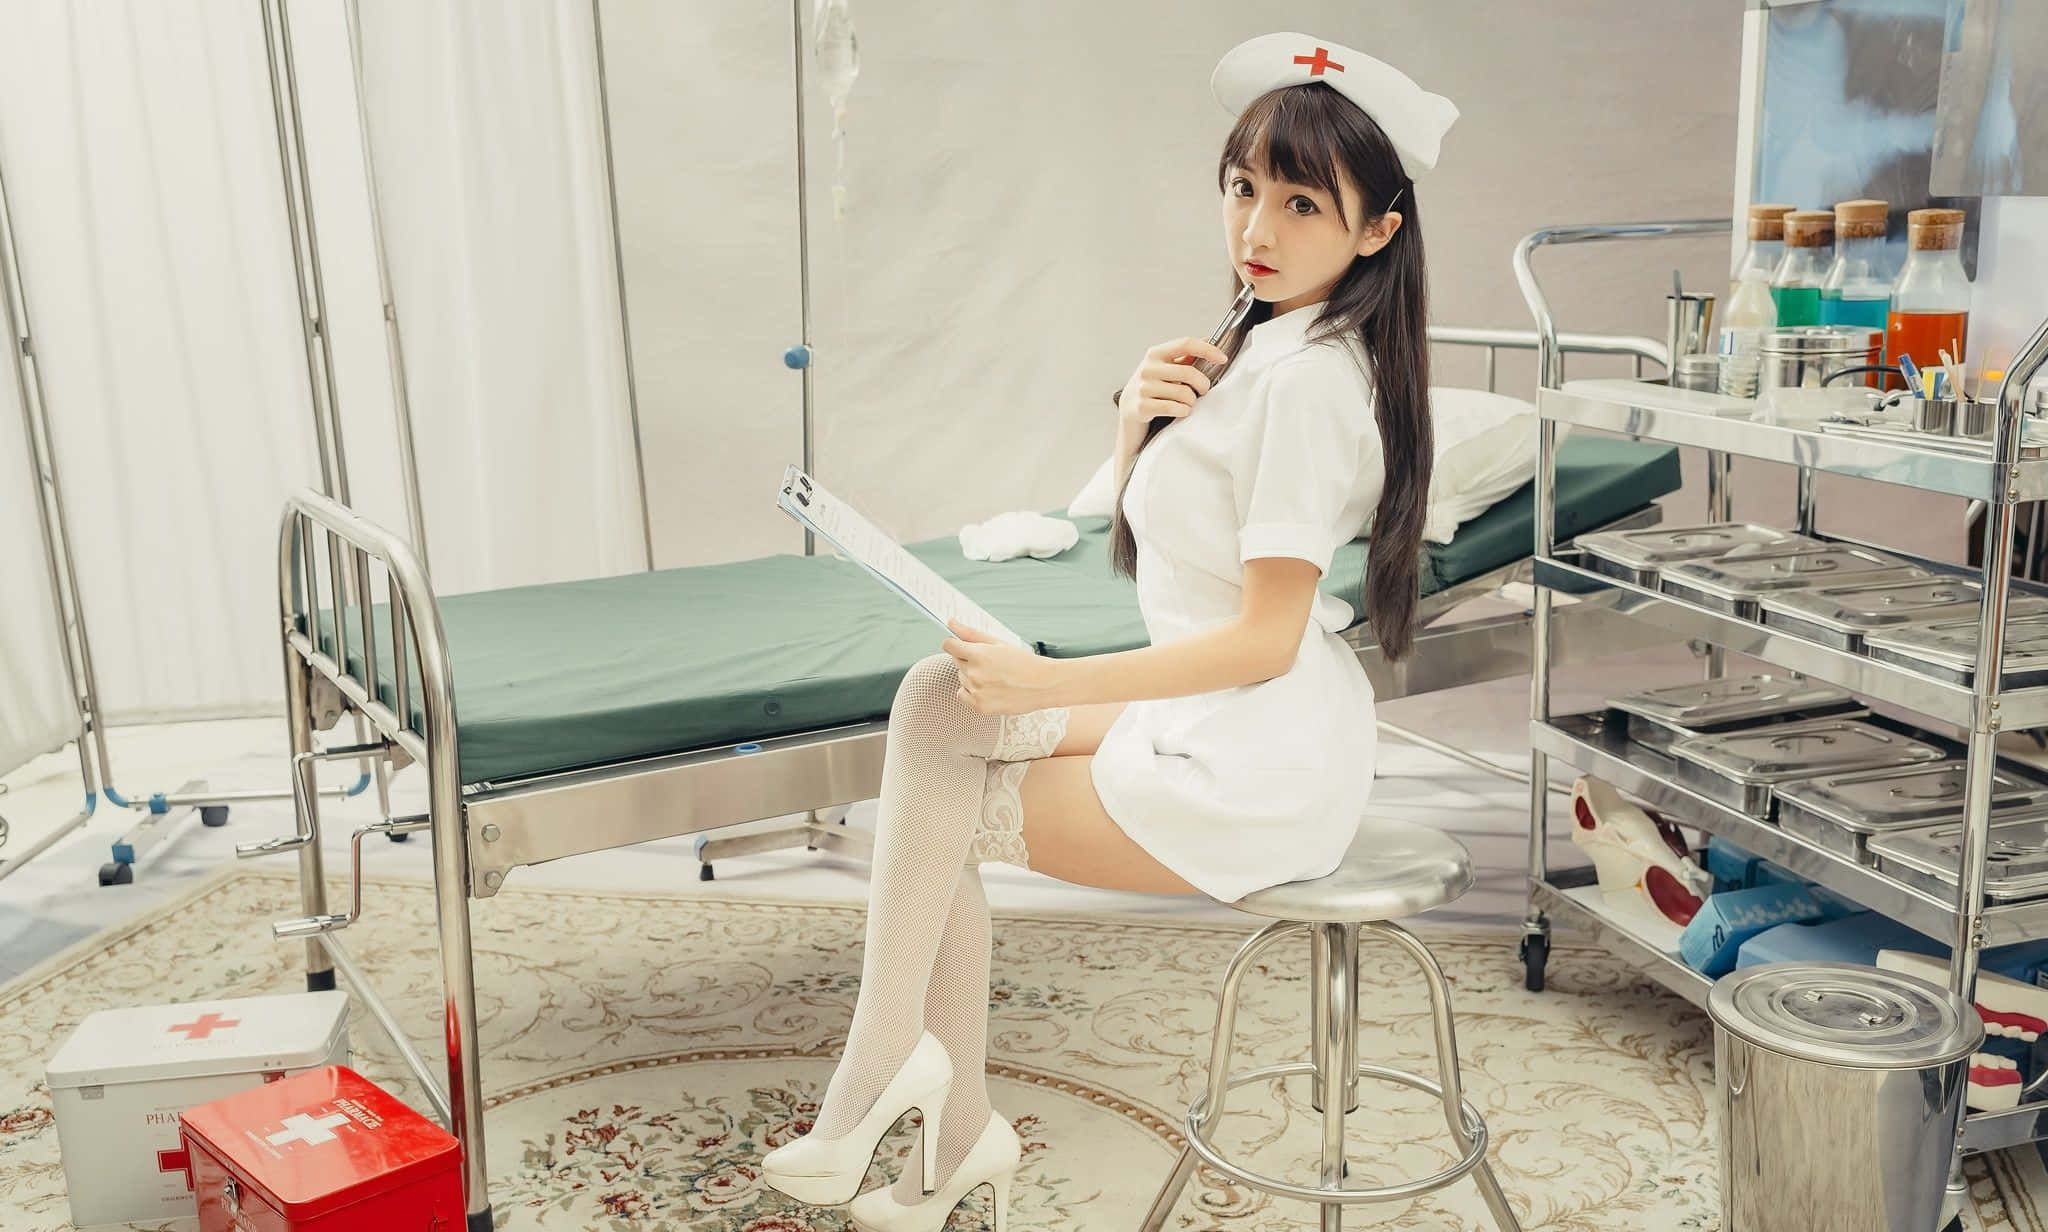 A Nurse Sitting On A Stool In A Hospital Room